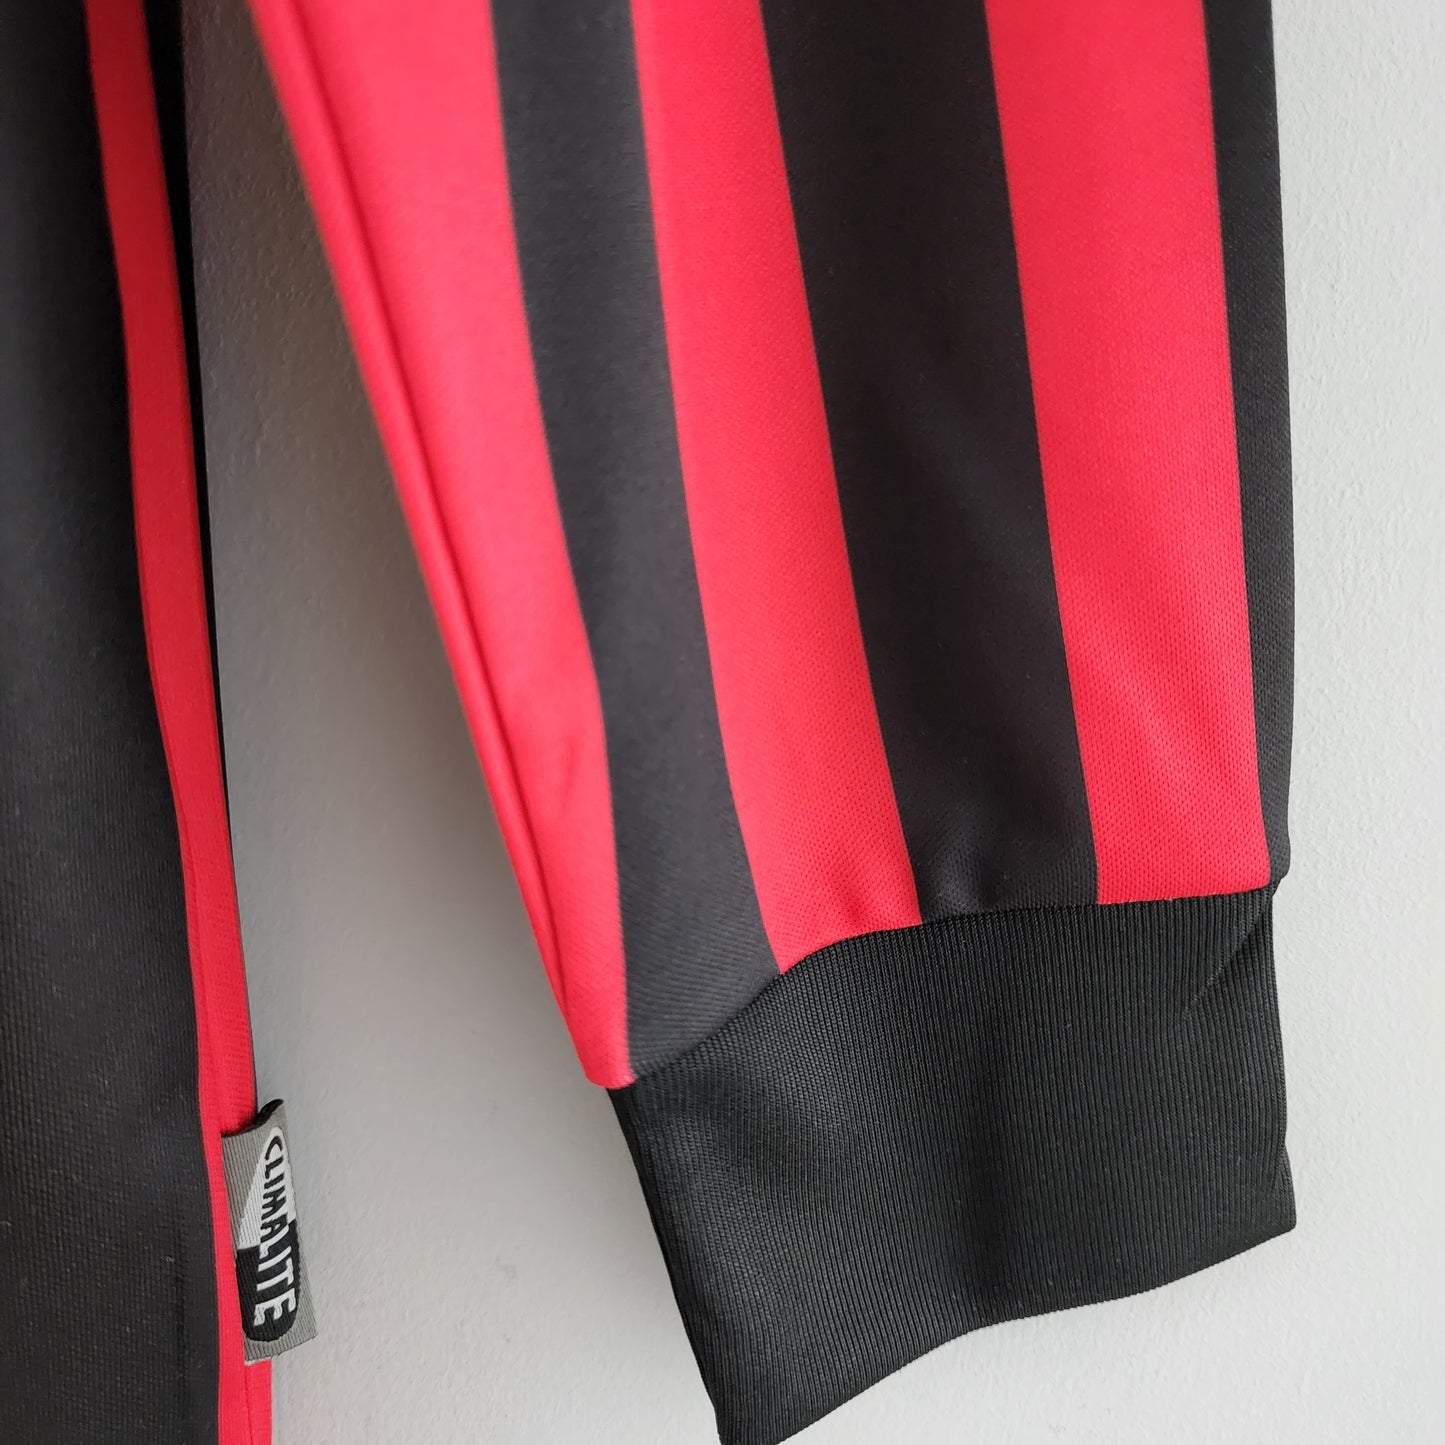 Retro AC Milan 99/00 Home Long Sleeve Kit